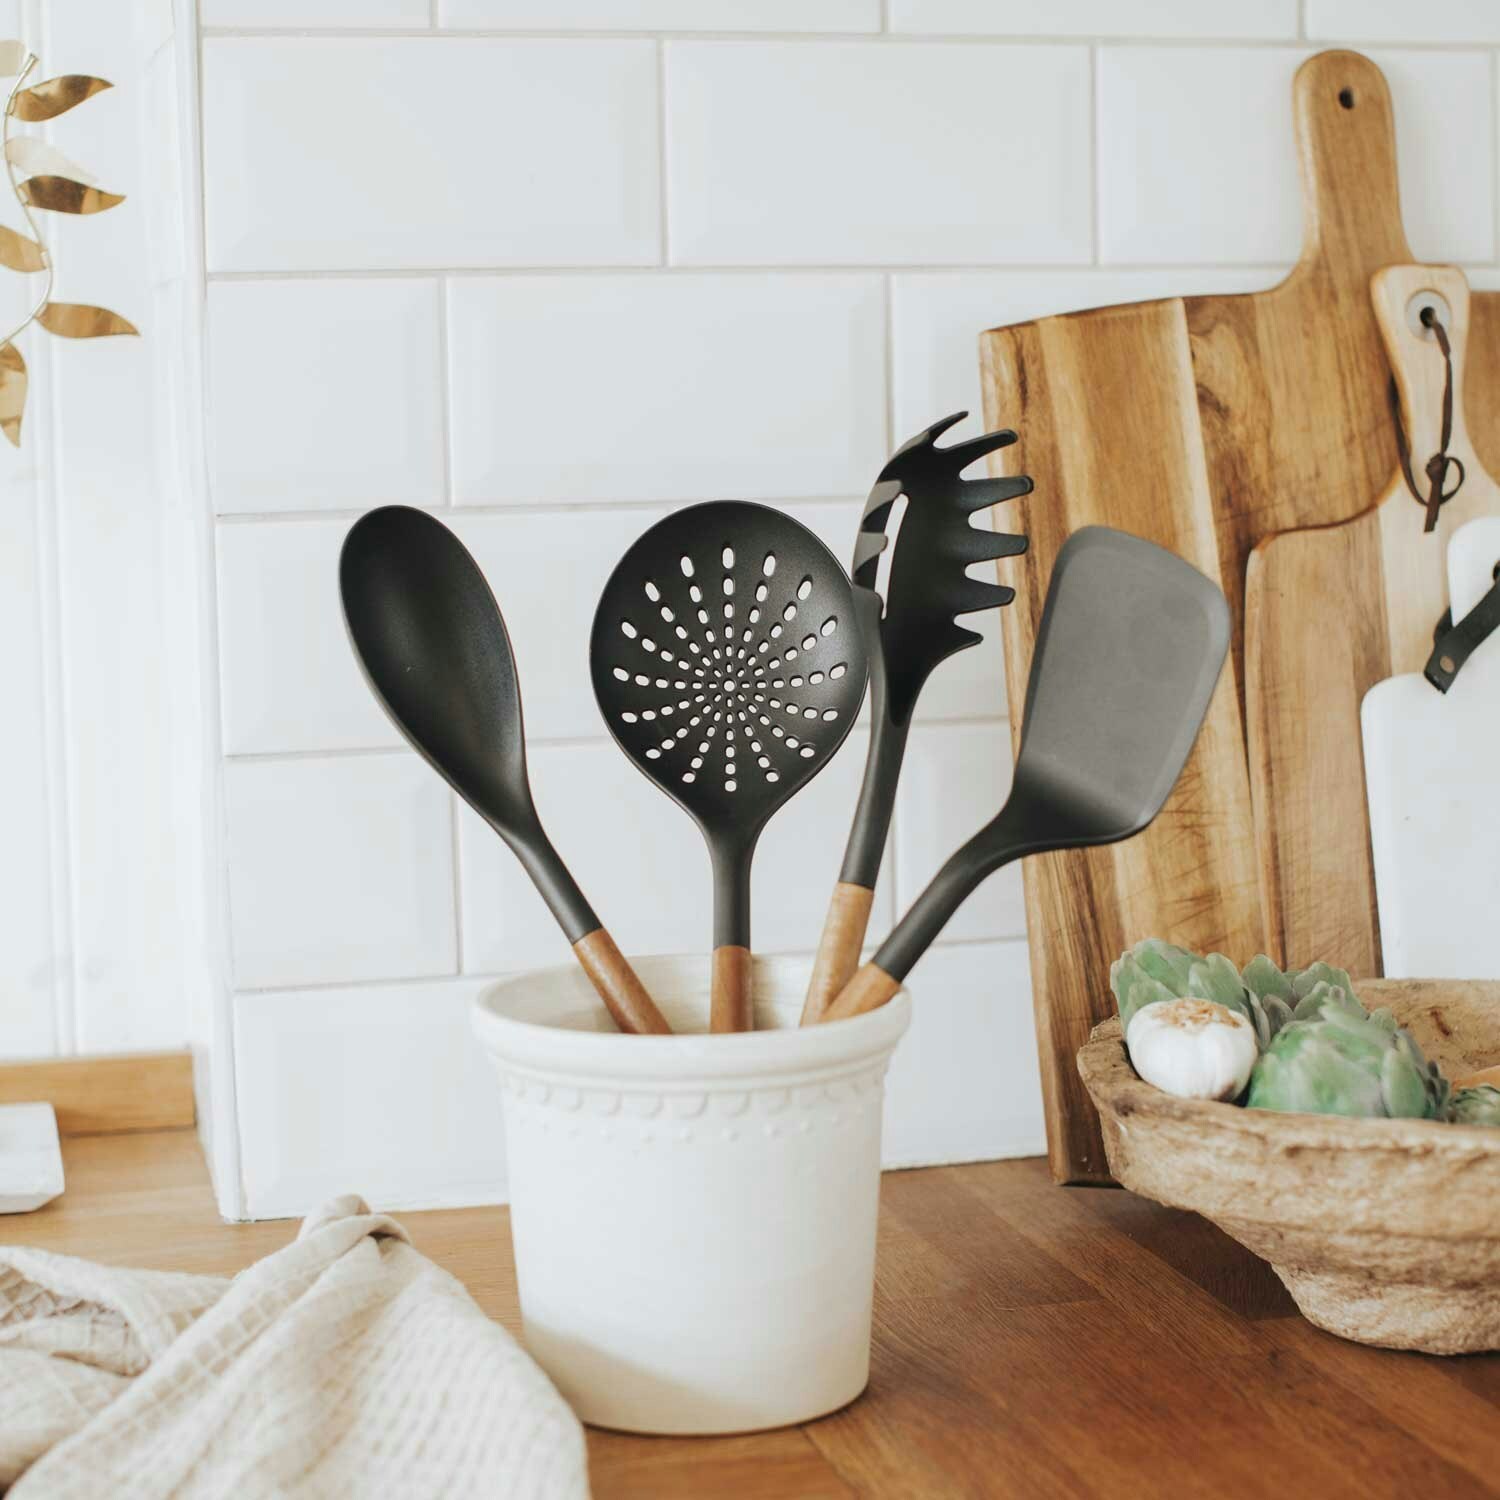 https://royaldesign.com/image/2/dorre-korra-kitchen-utensils-4-pieces-0